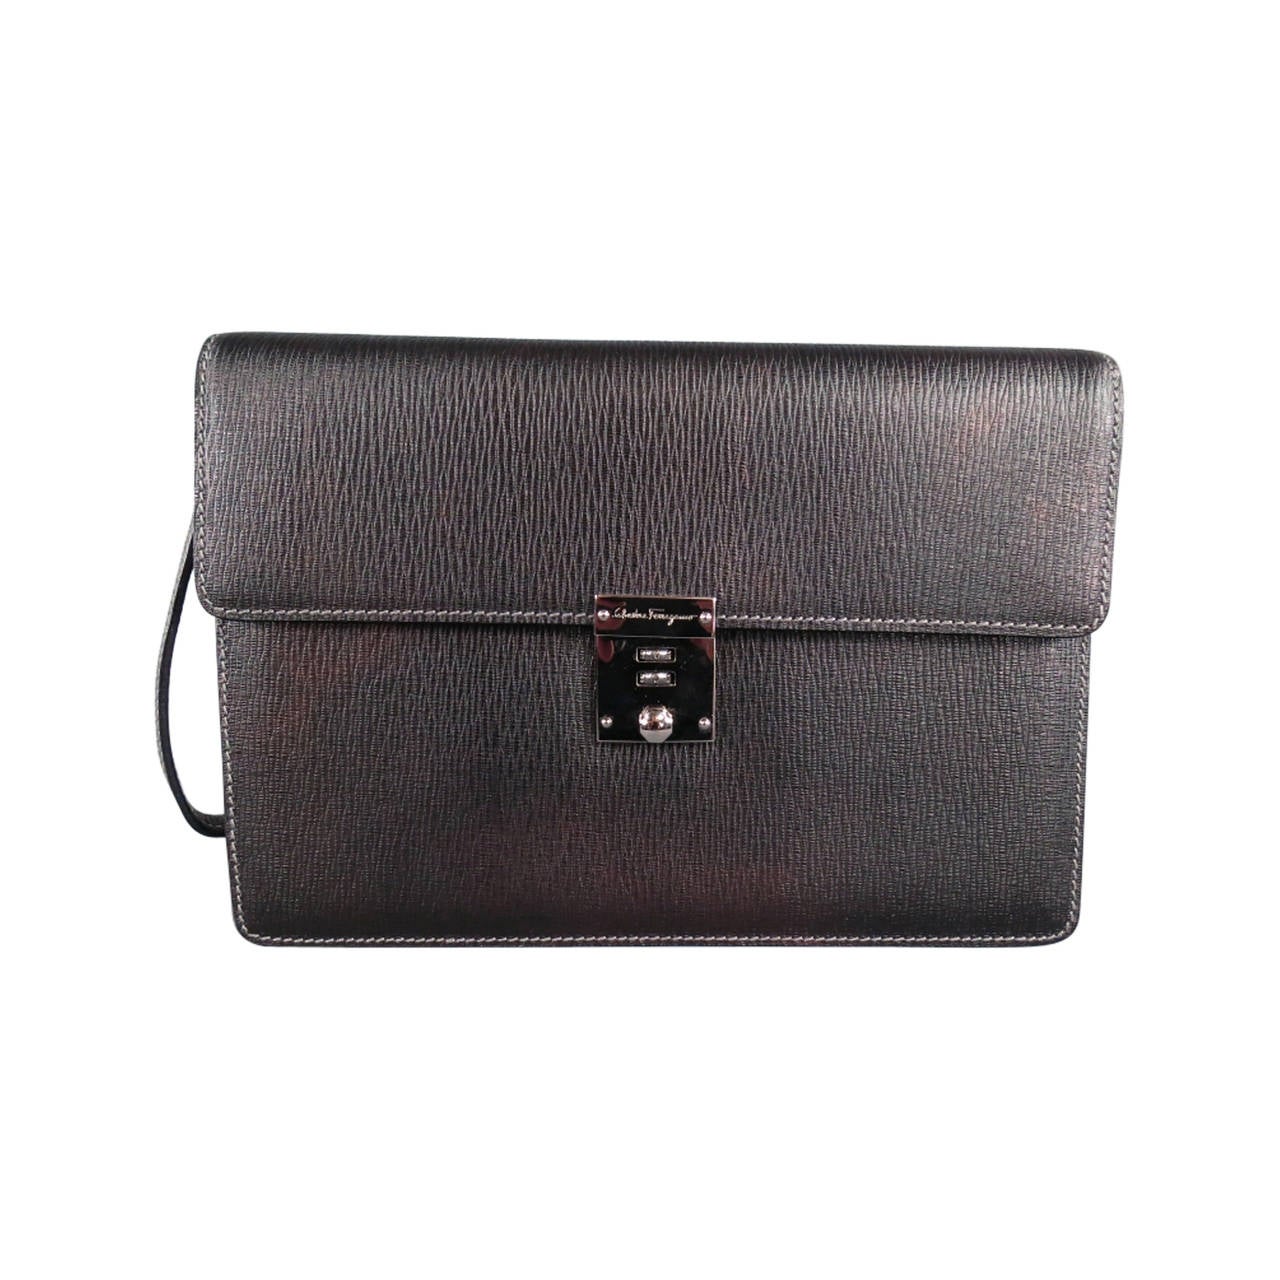 SALVATORE FERRAGAMO Black Textured Leather Wristlet Clutch Bag